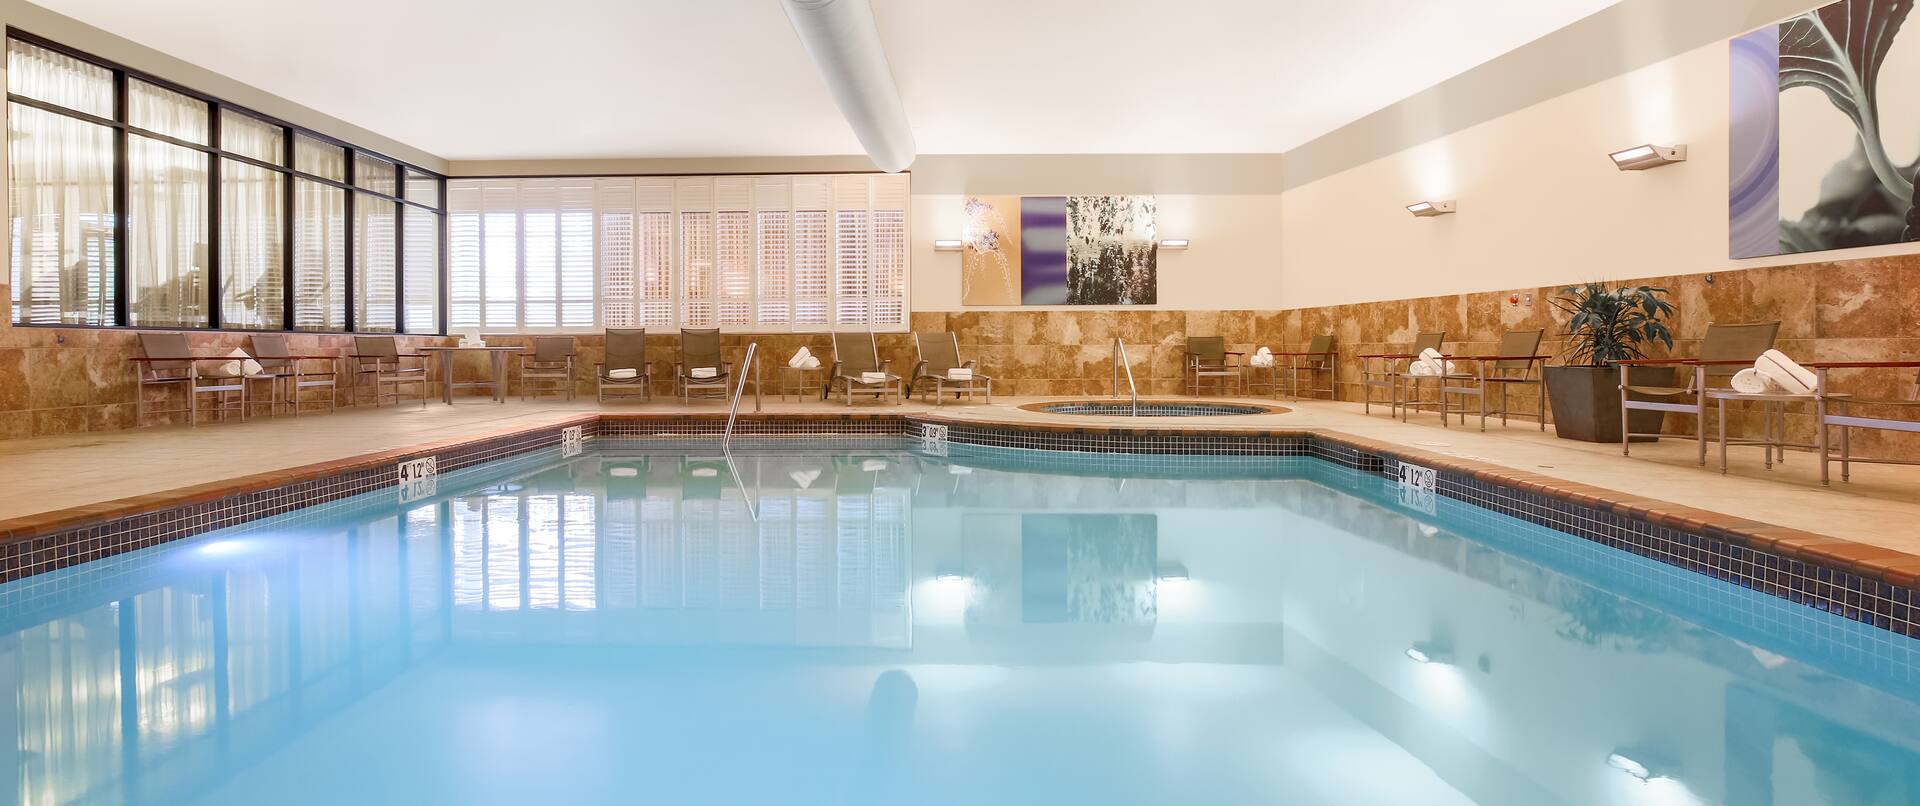 Hilton Promenade at Branson Landing Hotel, MO - Indoor Pool